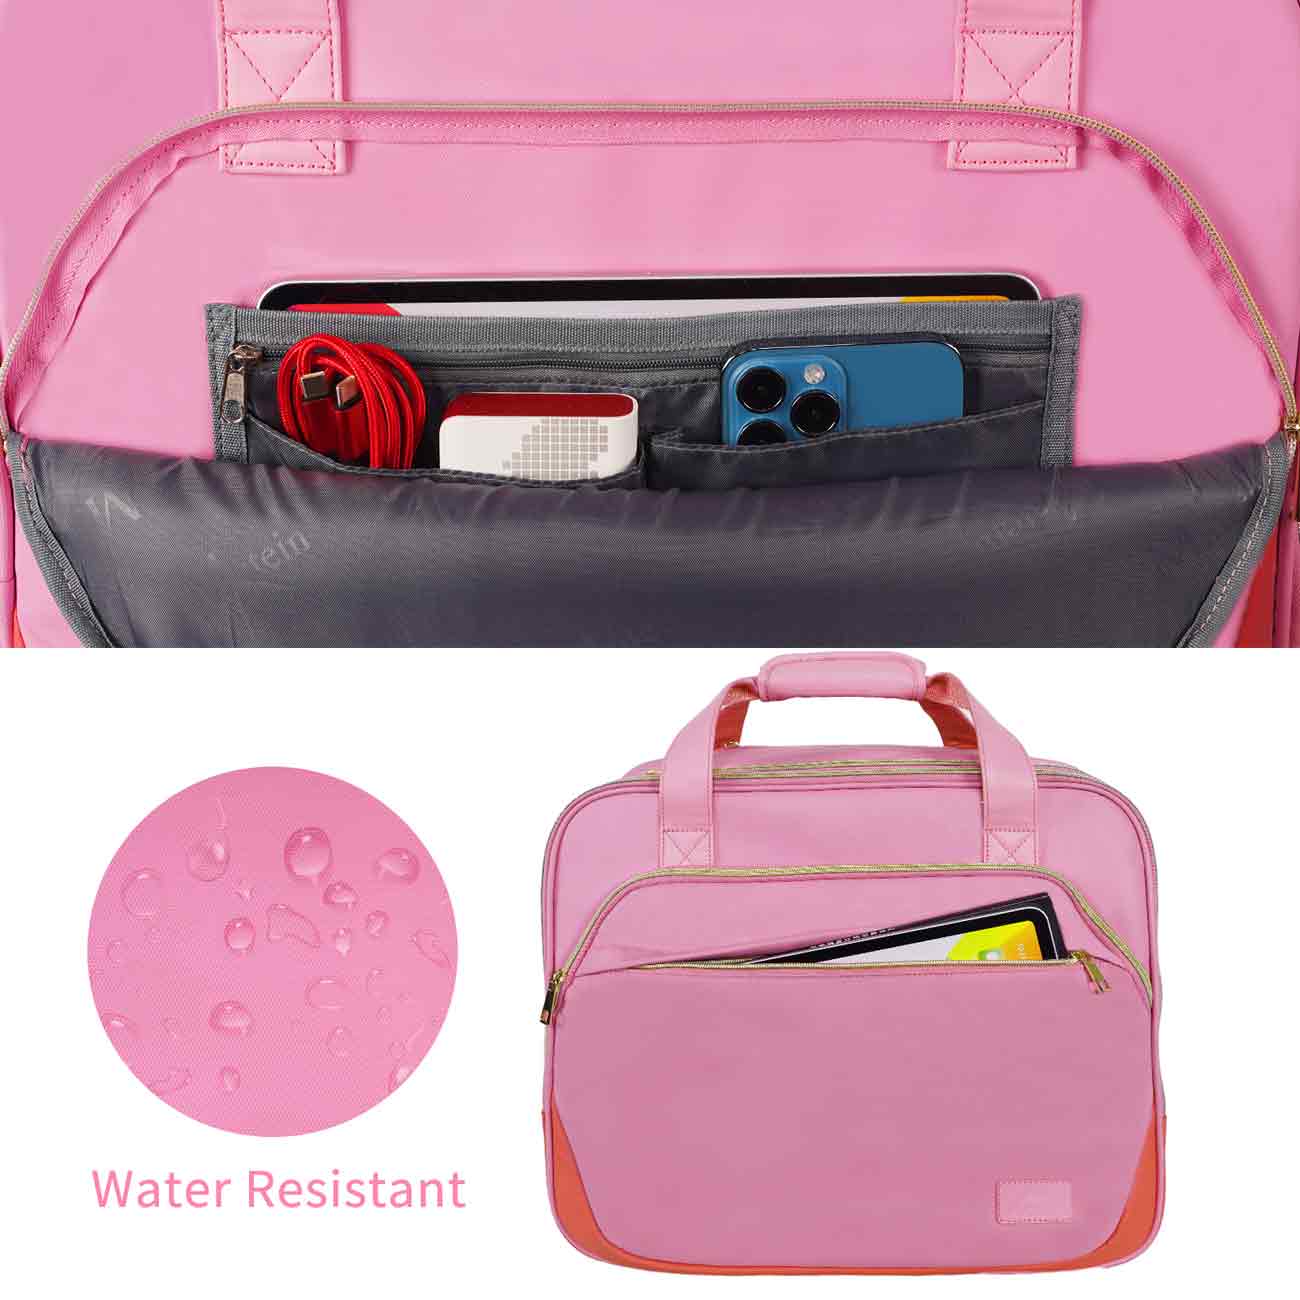 Rolling Laptop Bag, Matein 17 inch Wheeled Briefcase for Men Women, Waterproof